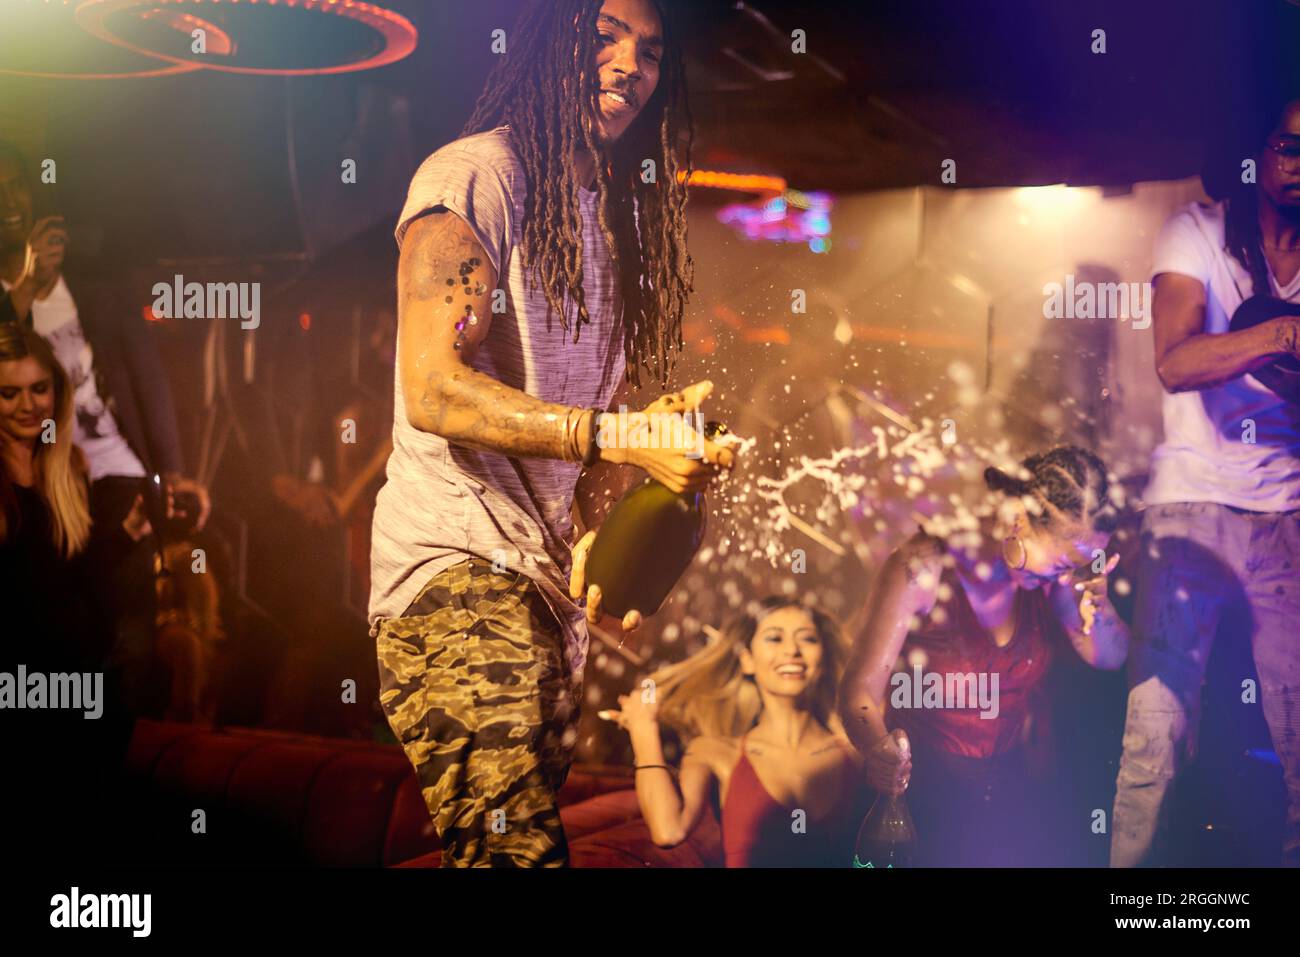 Young man spraying champagne at nightclub Stock Photo